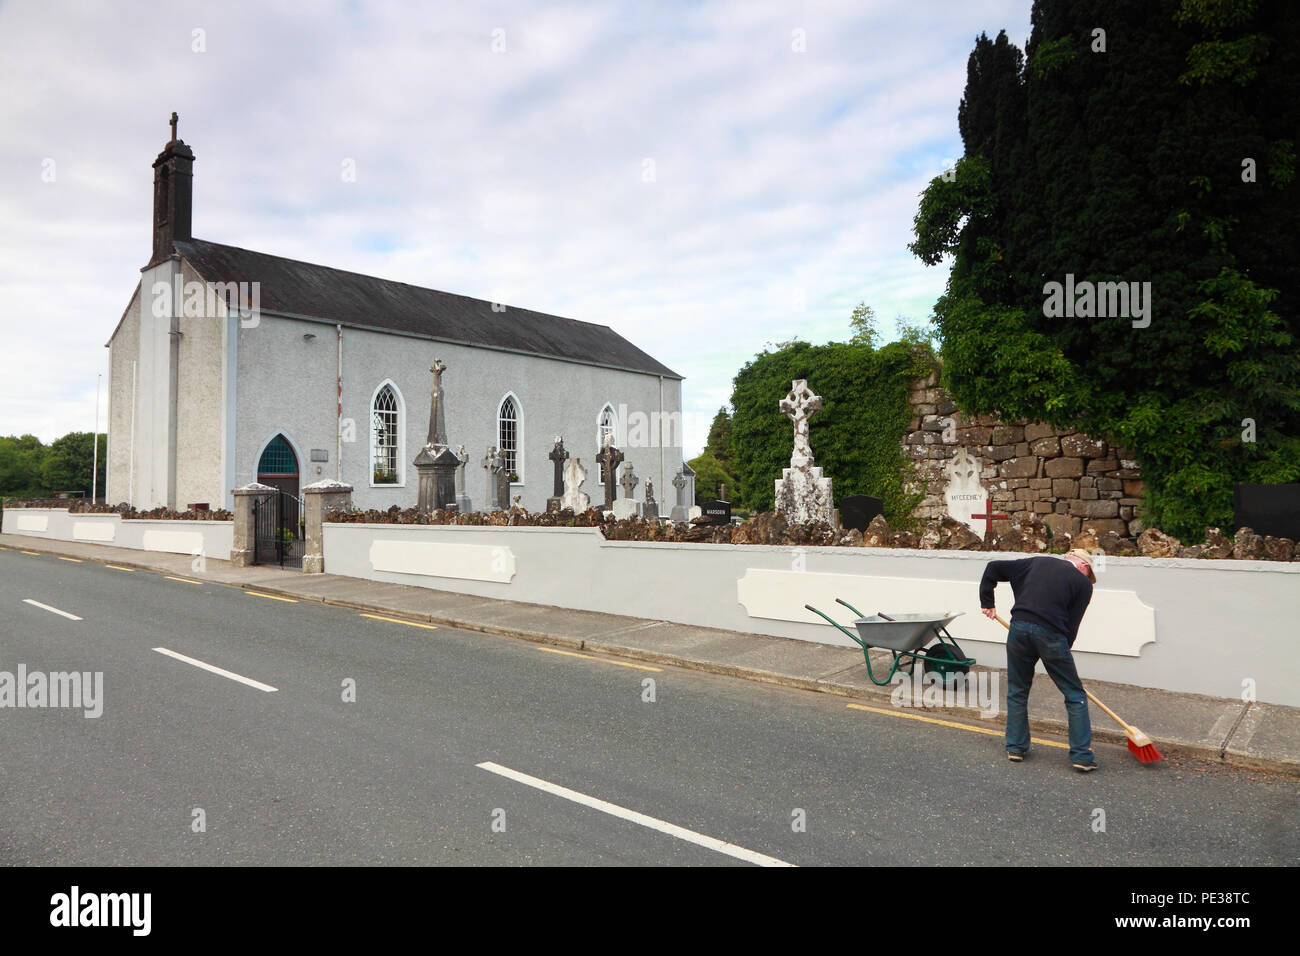 Cluan - a - Donald Römisch-katholische Kirche im Dorf Longord Cloondara, County, Irland Stockfoto